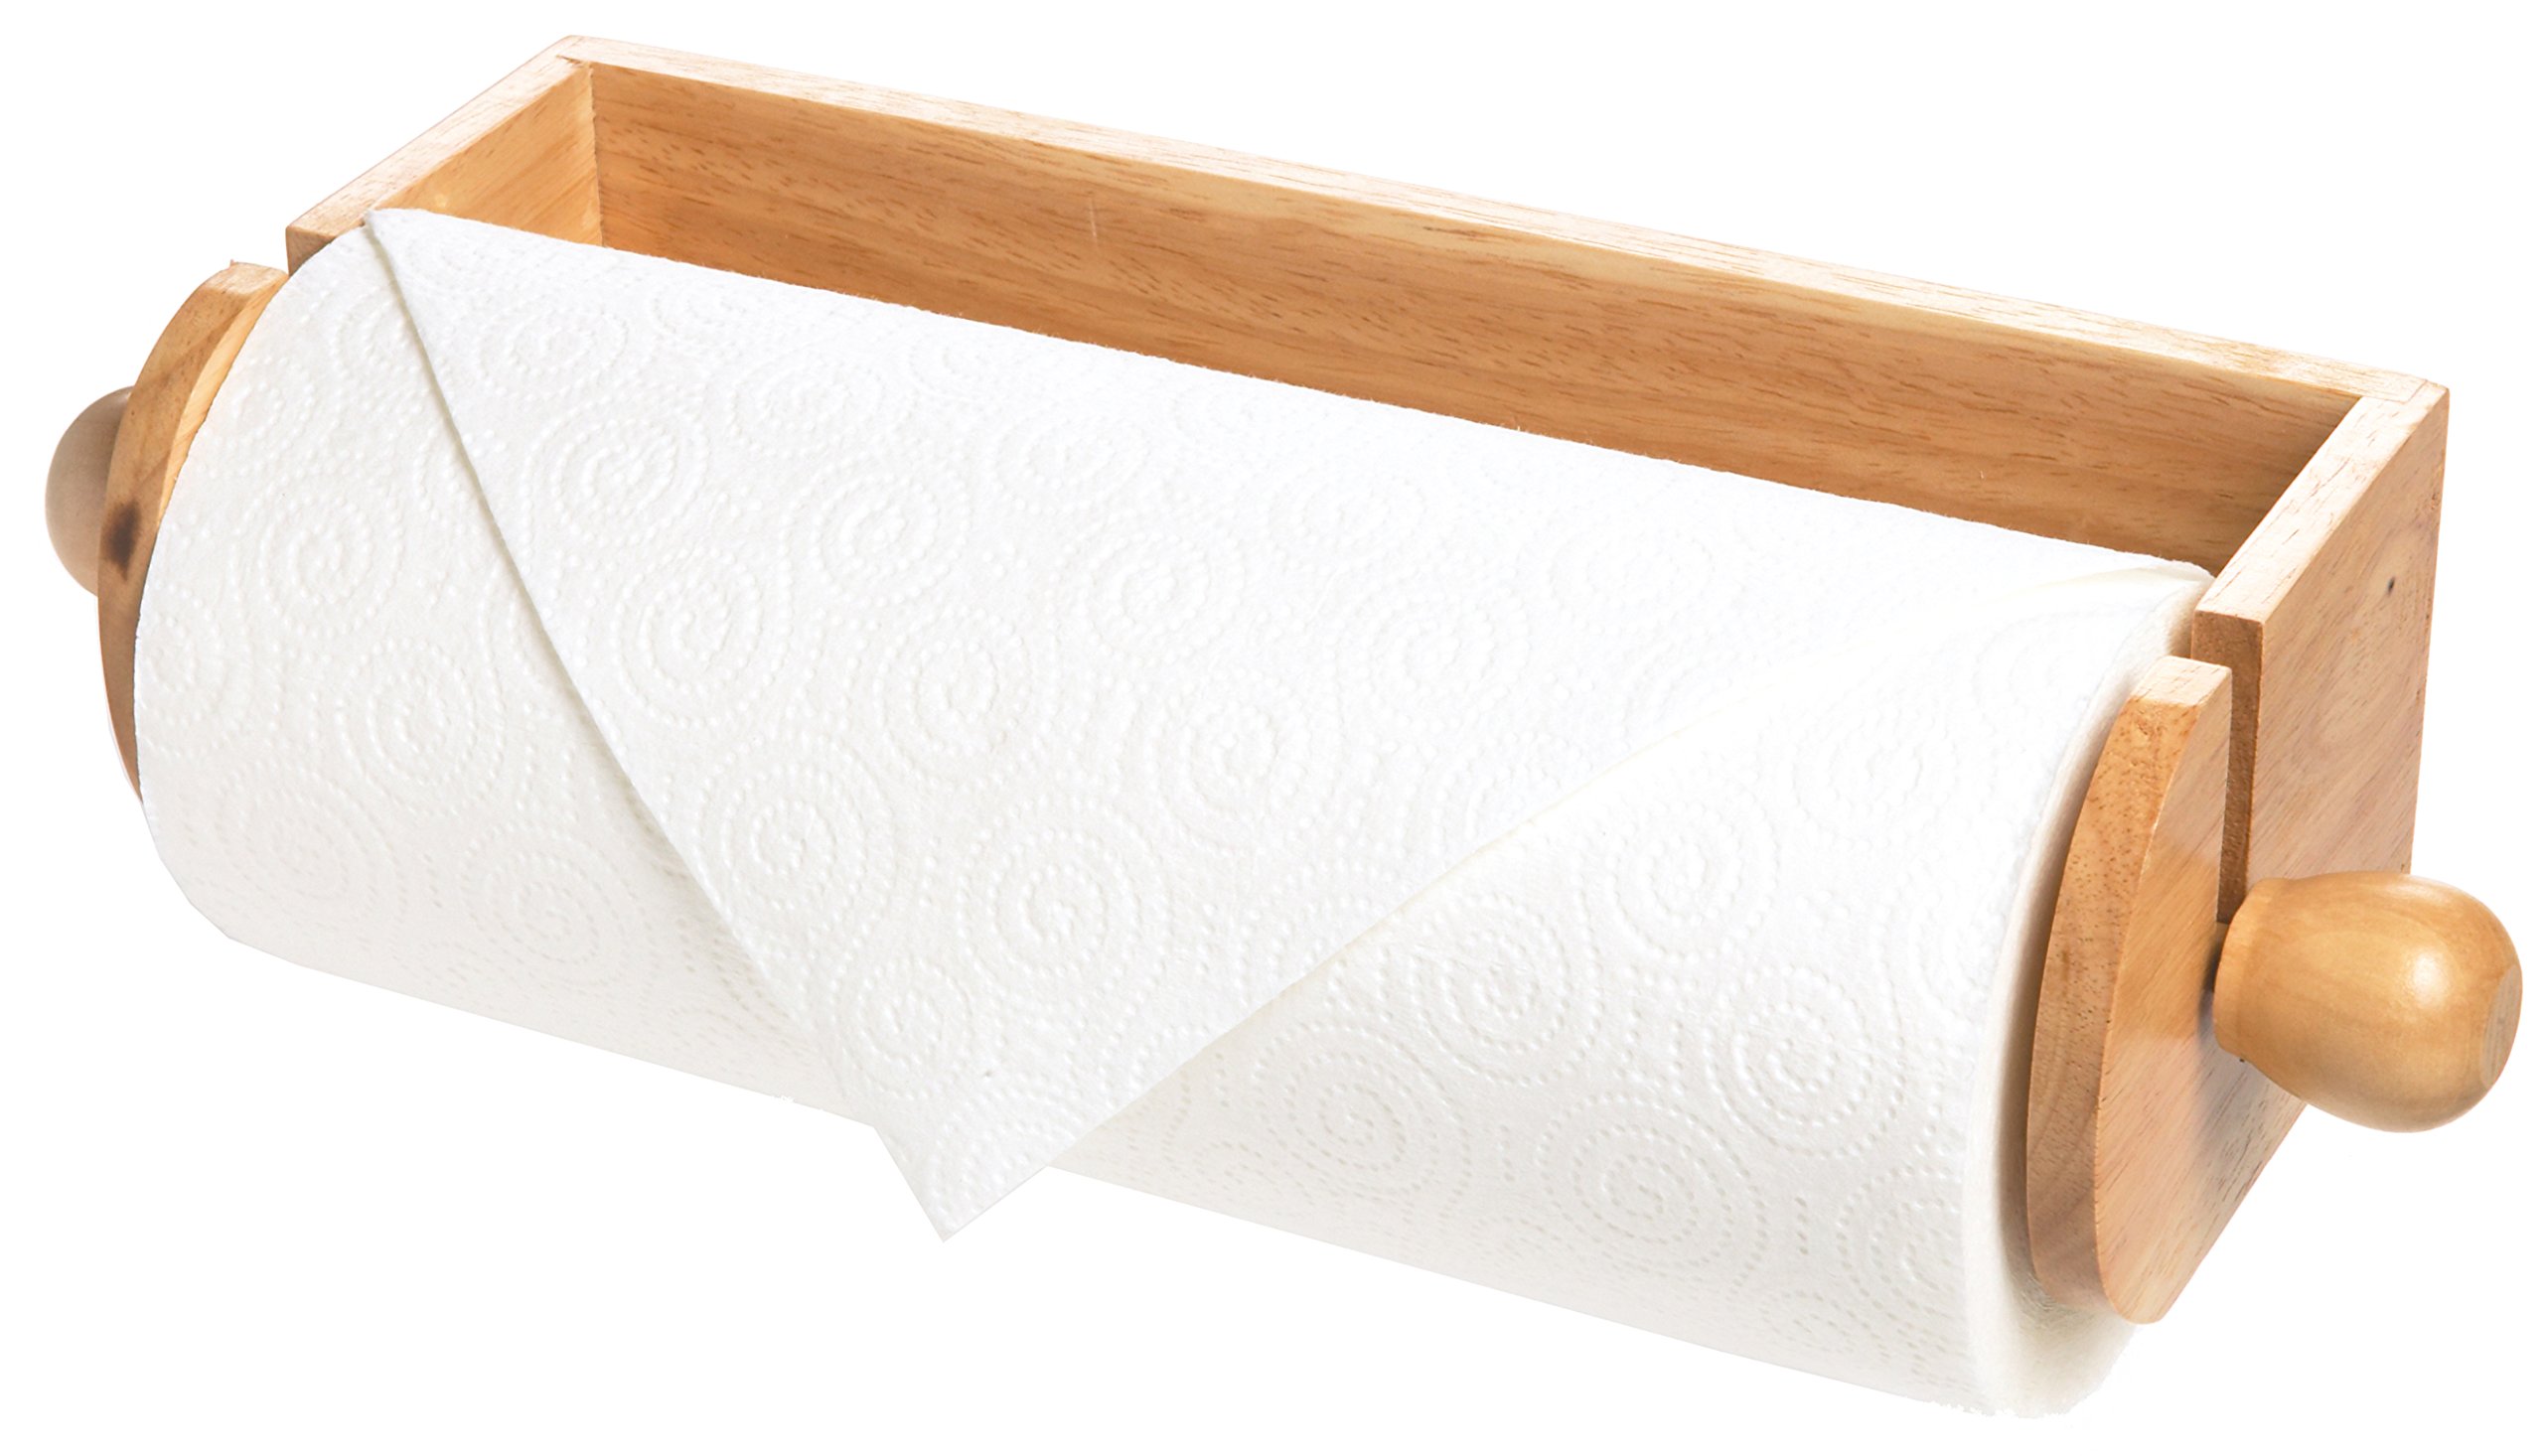  Wall Paper Towel Holder Wooden 4090 Fits Standard Size Kitchen Rolls